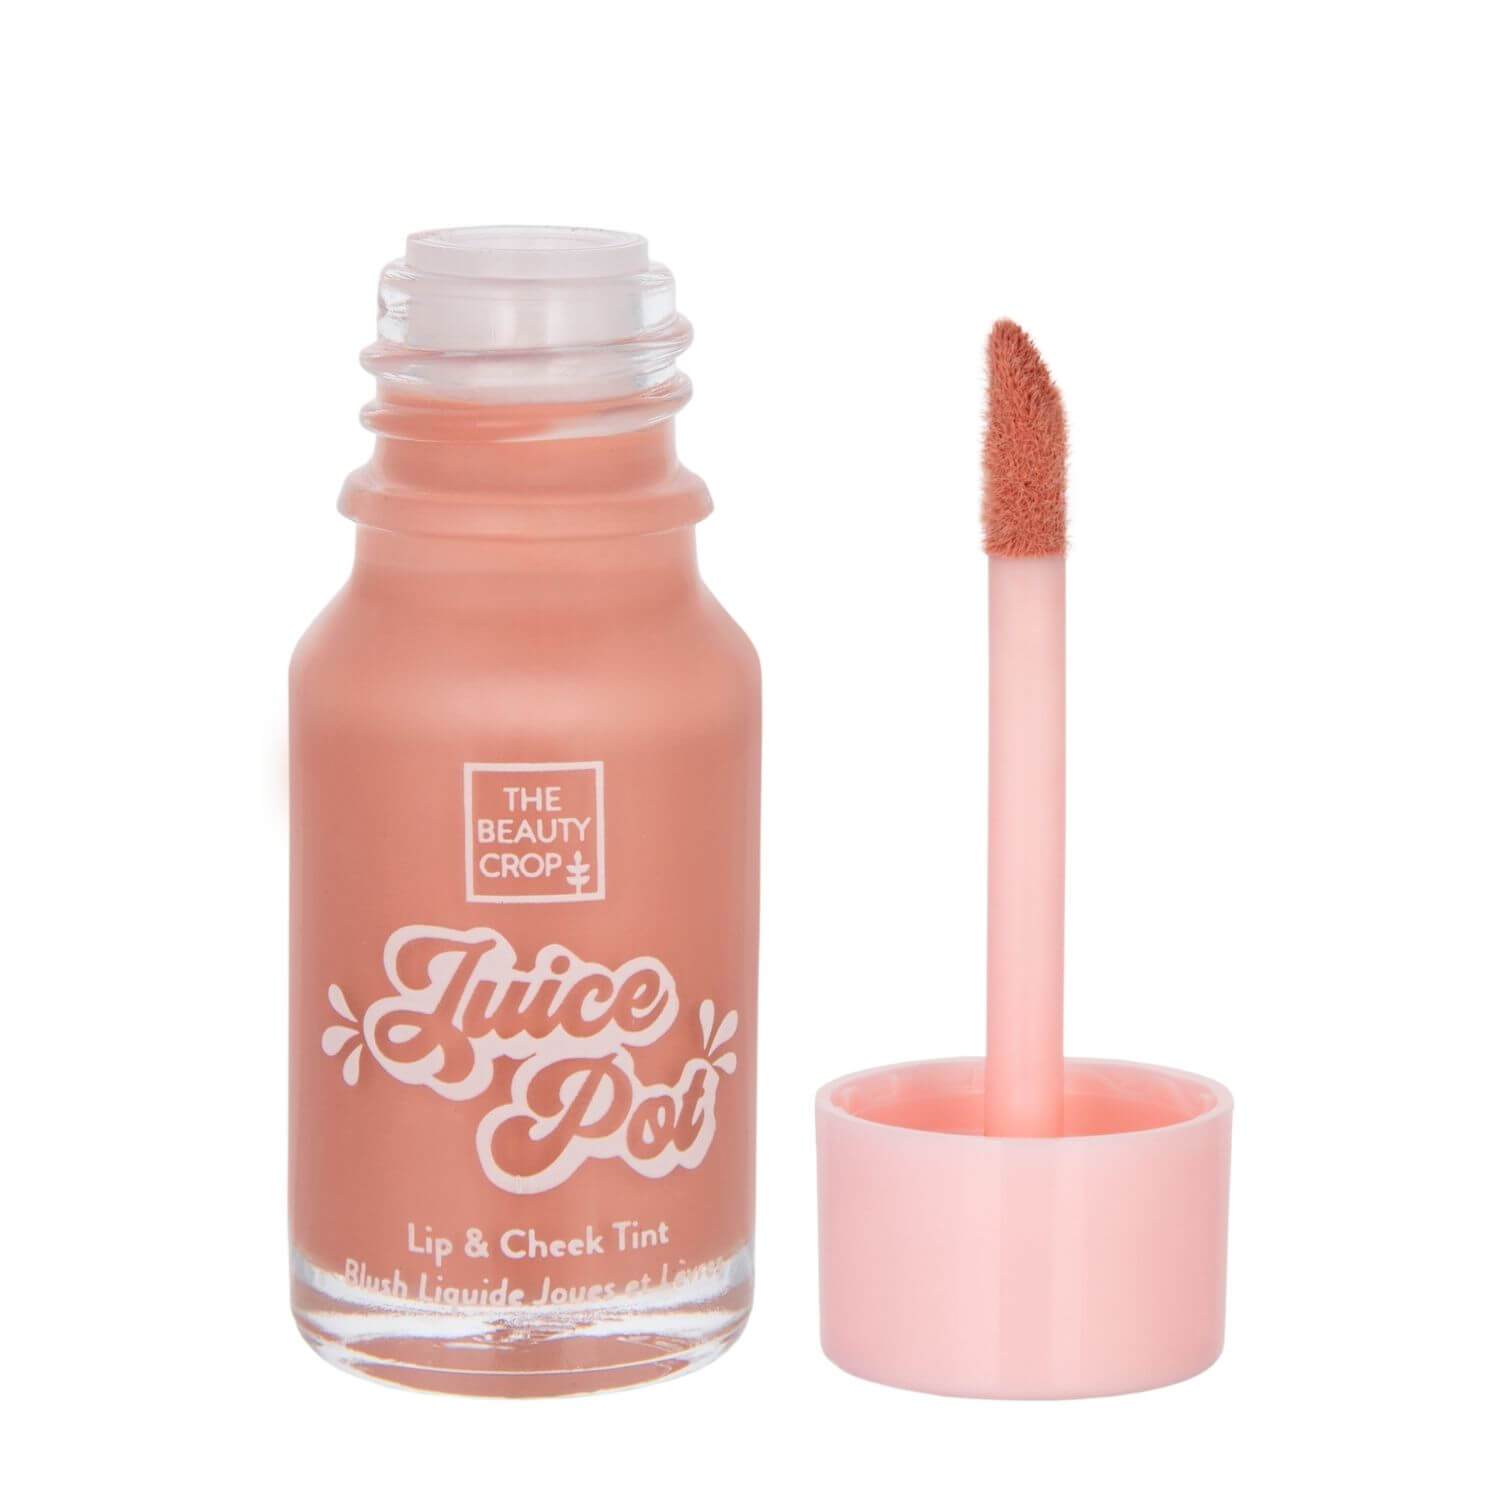 The Beauty Crop - Juice Pot Lip & Cheek Tint Peach